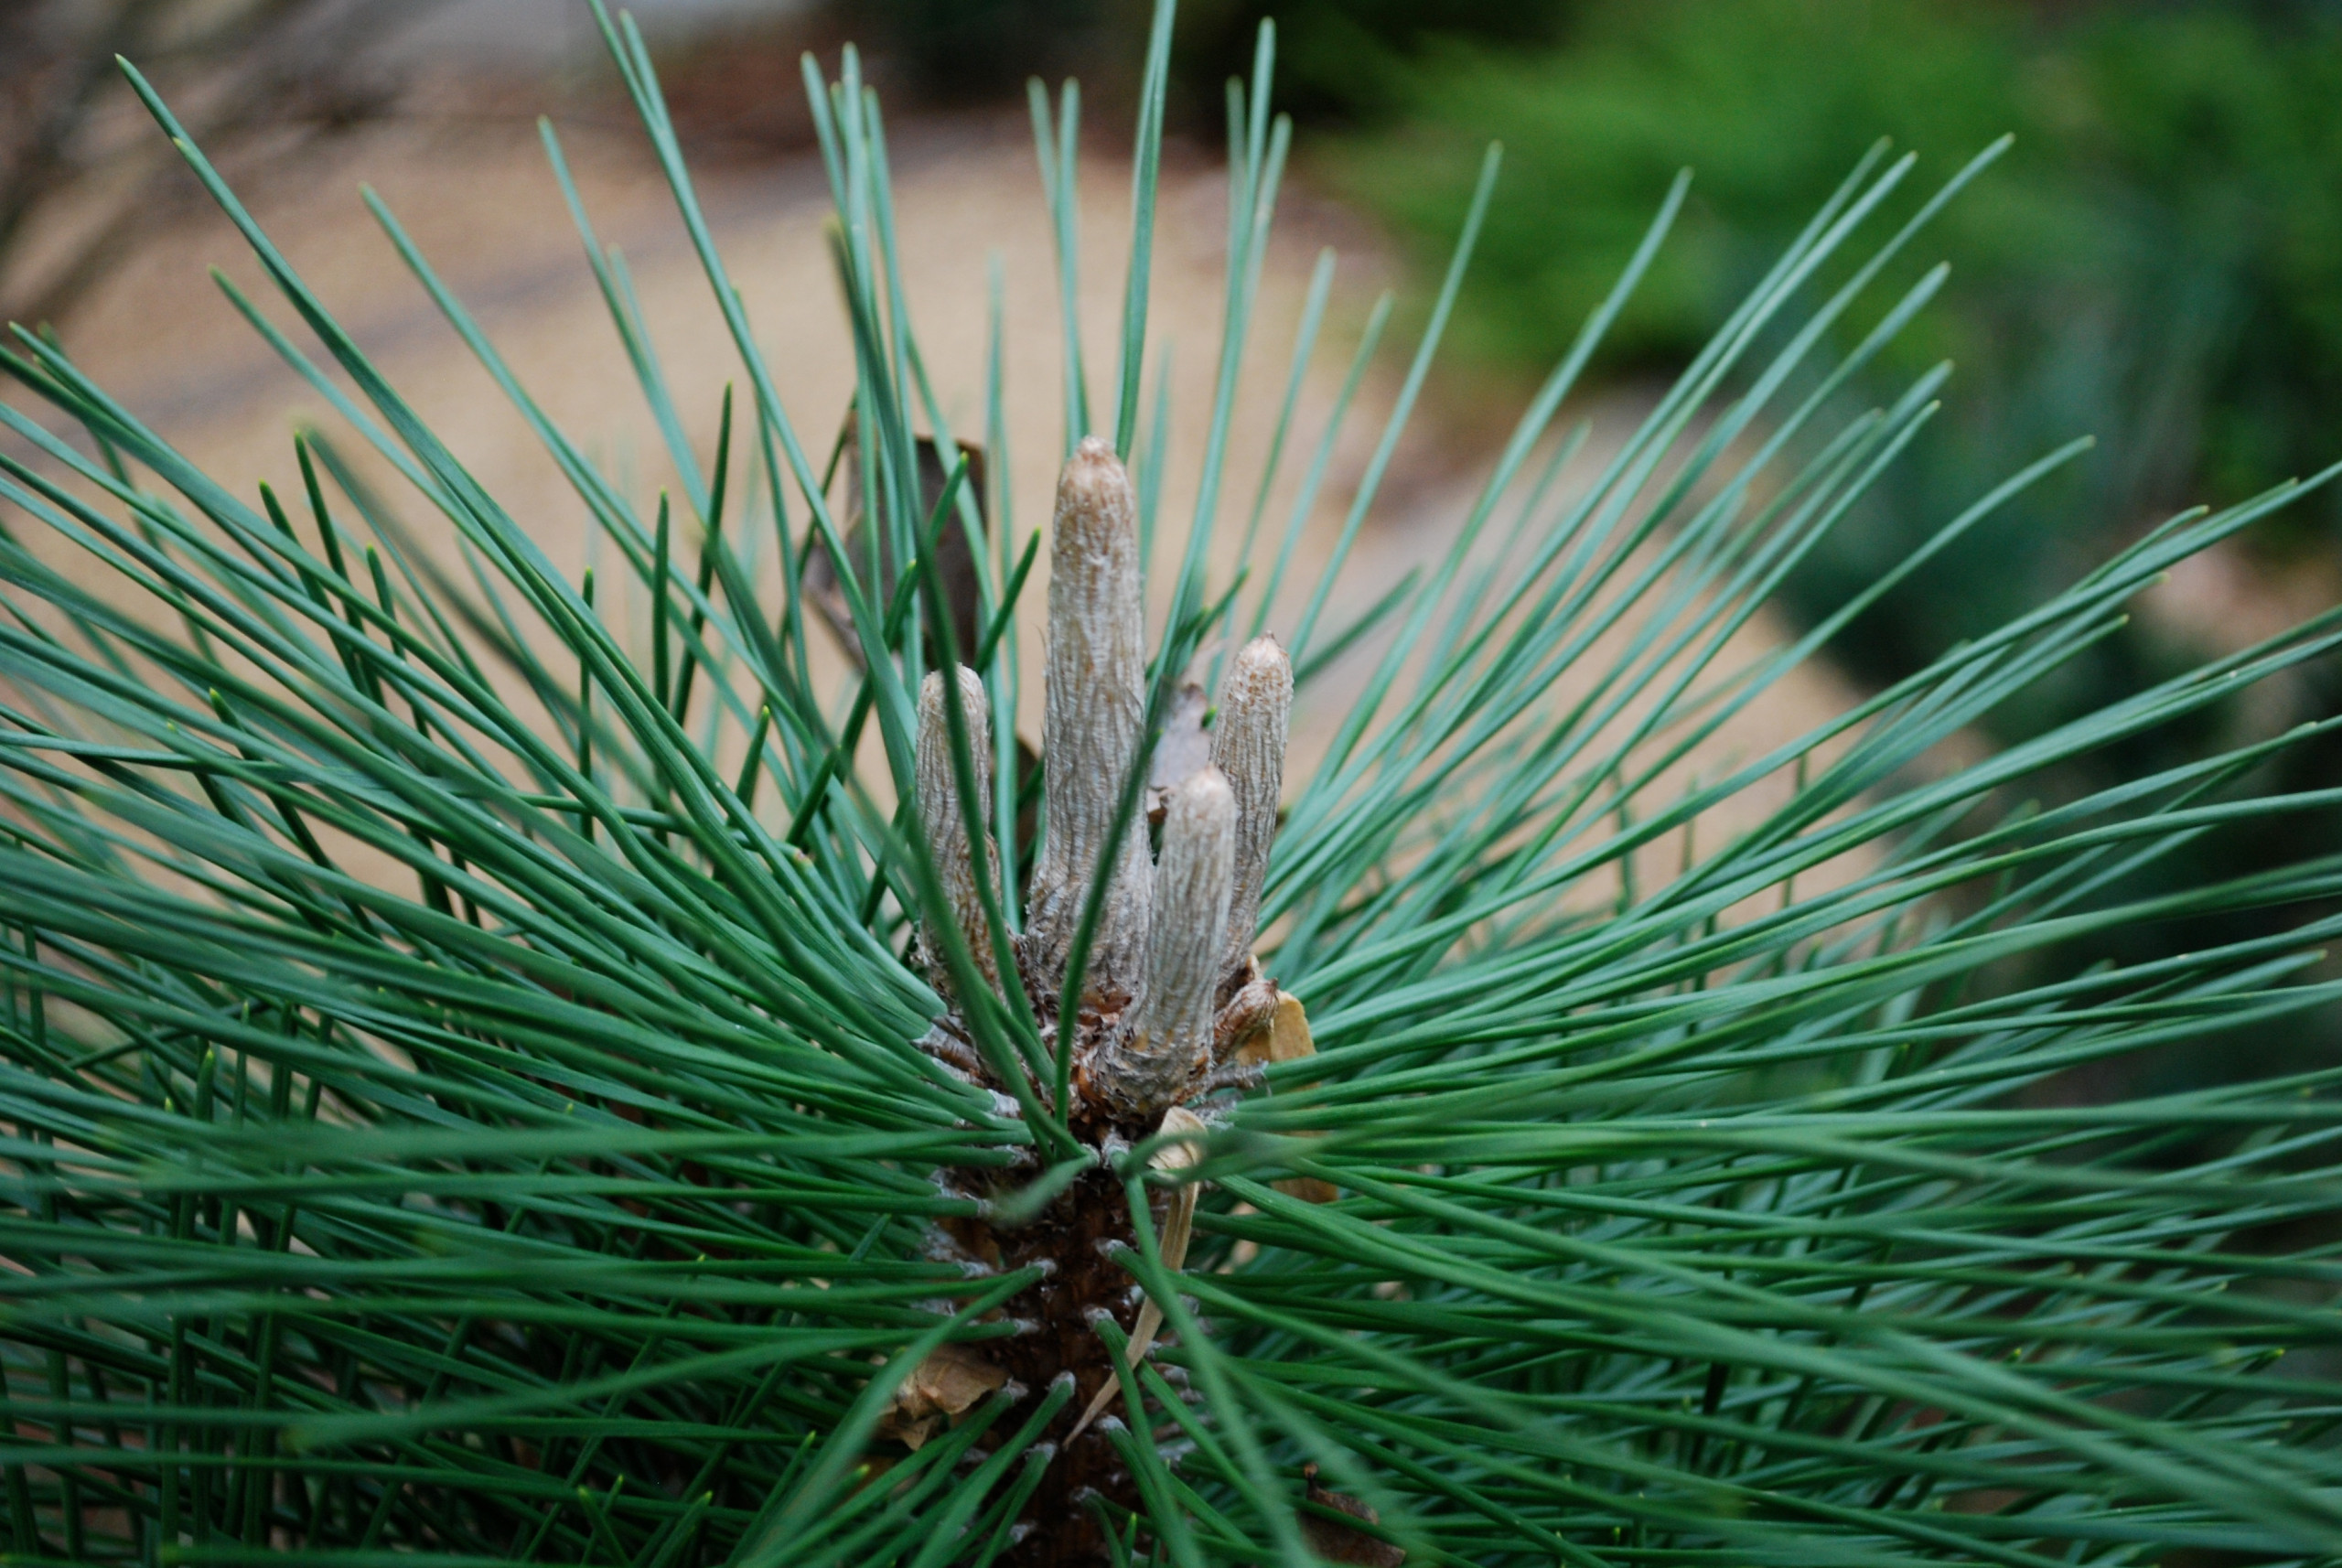 Thunderhead pine